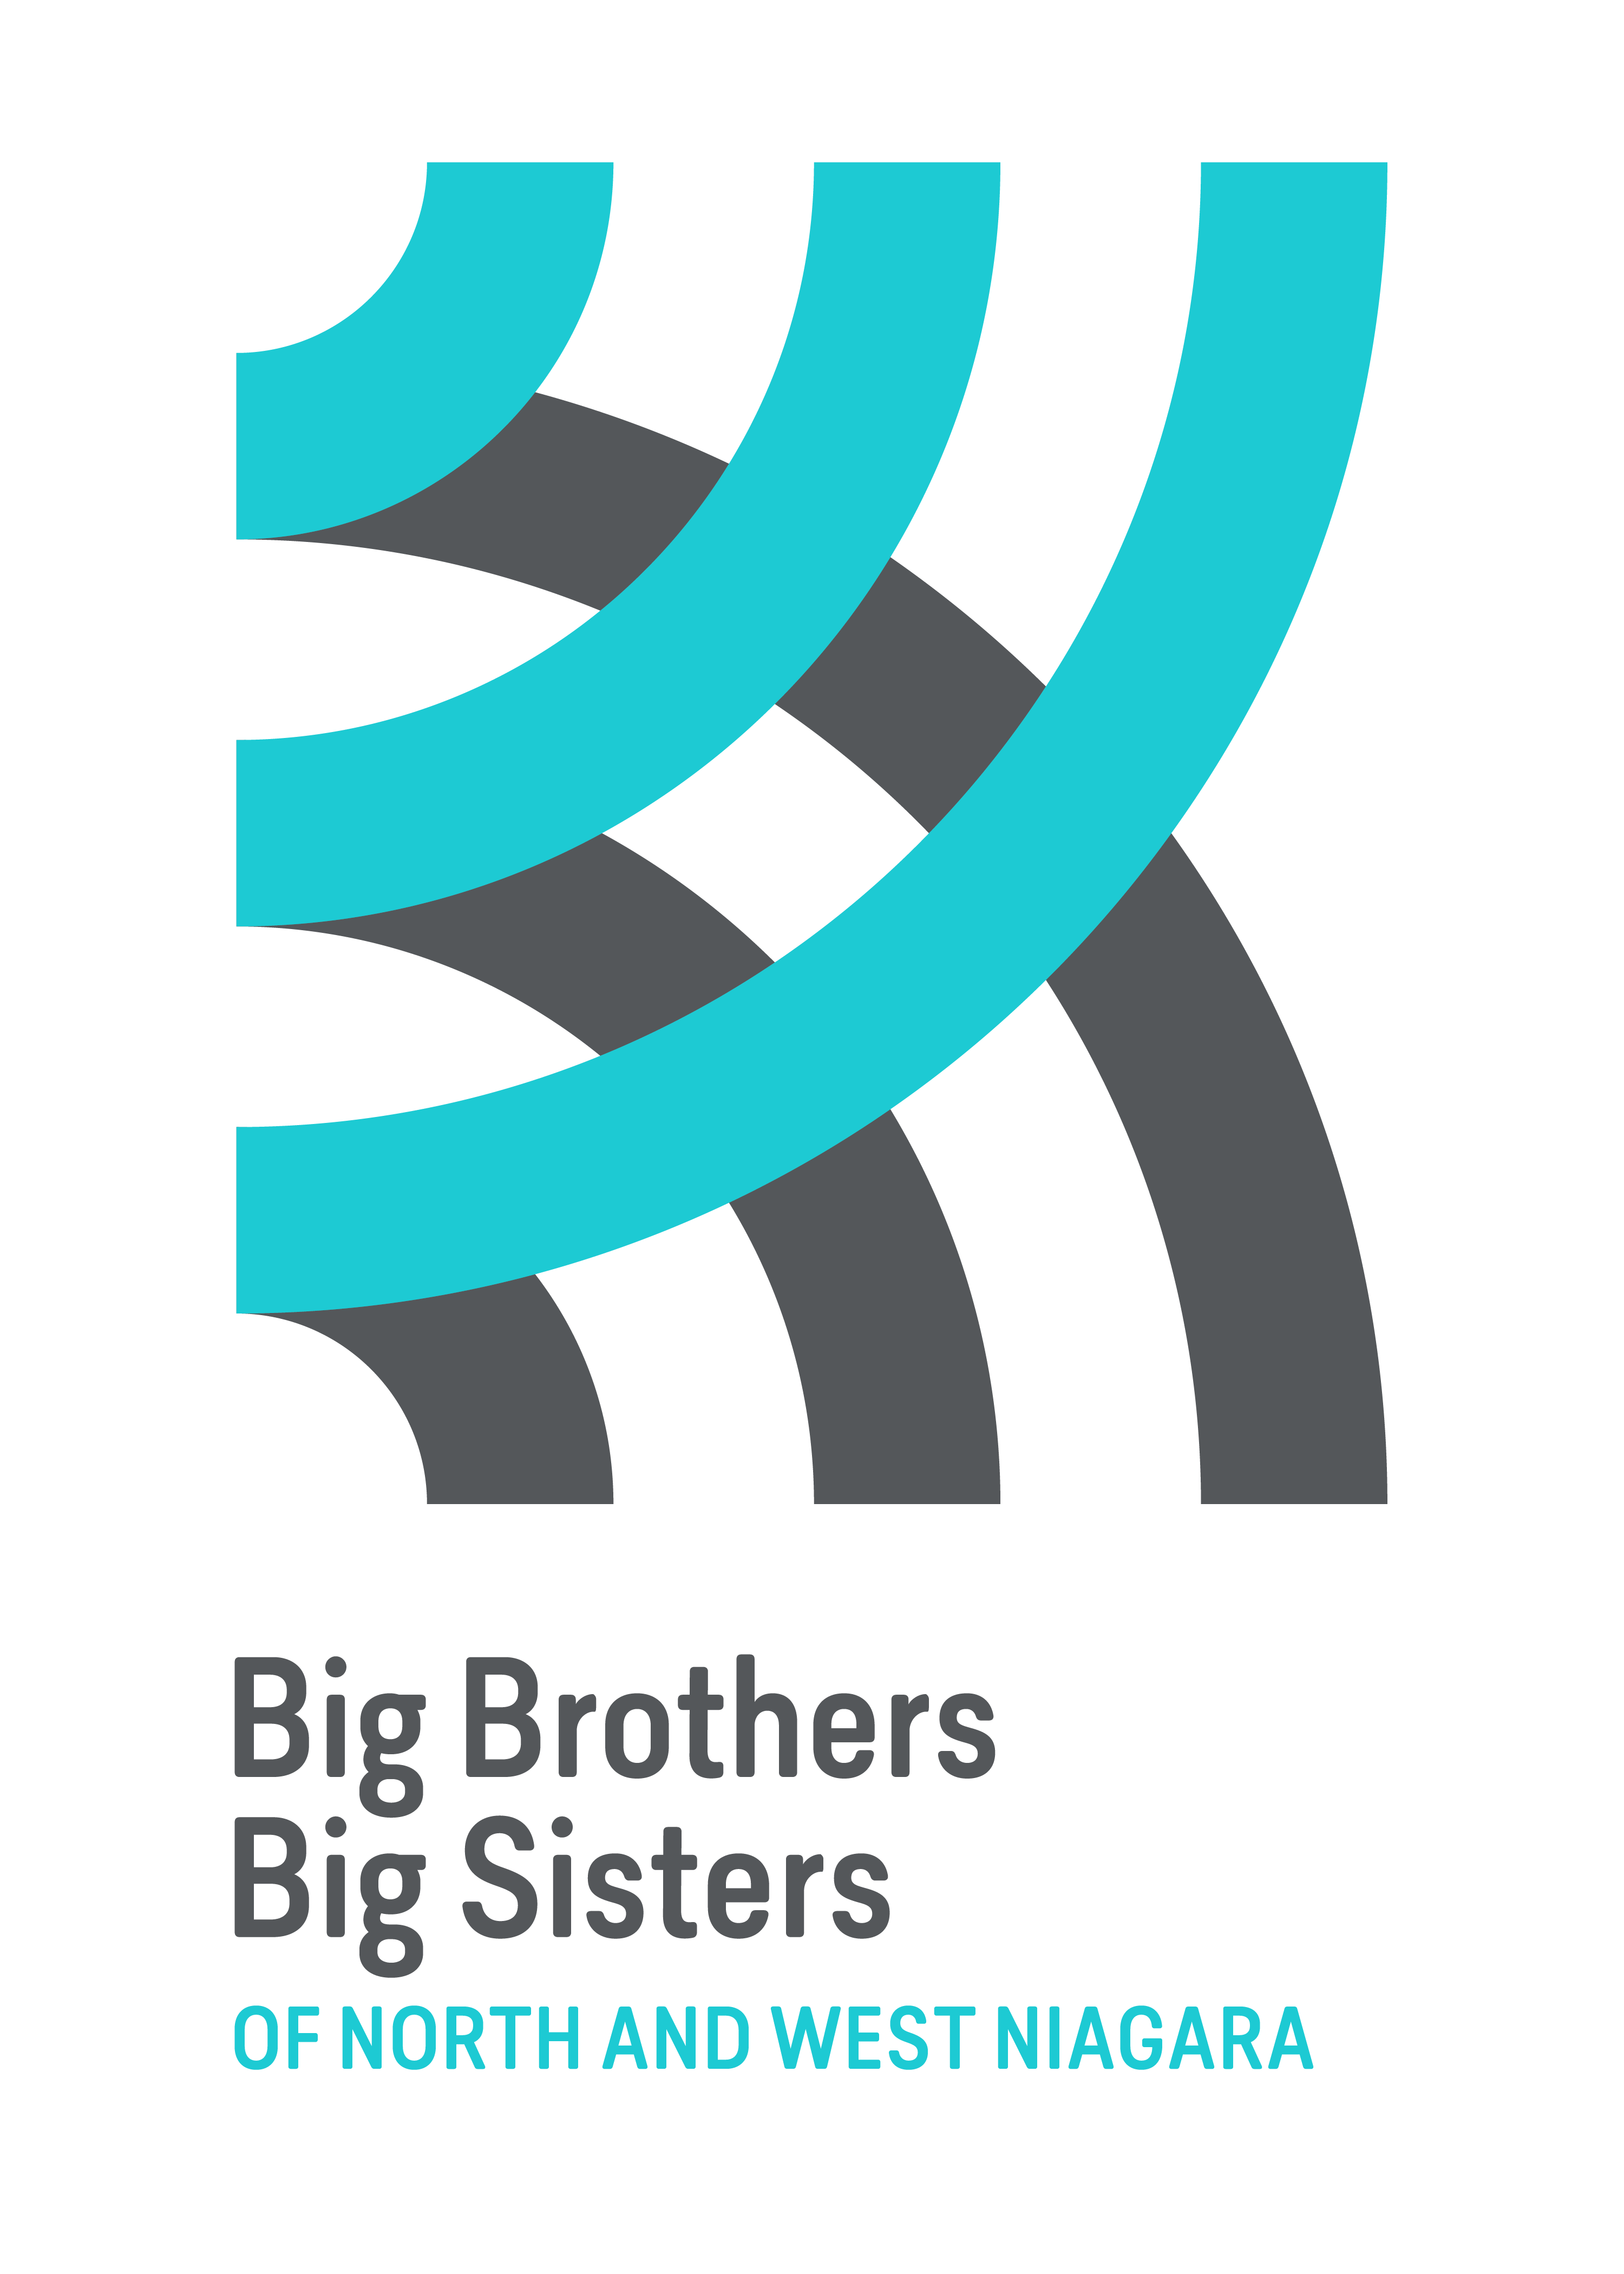 Big Brothers Big Sisters of Niagara